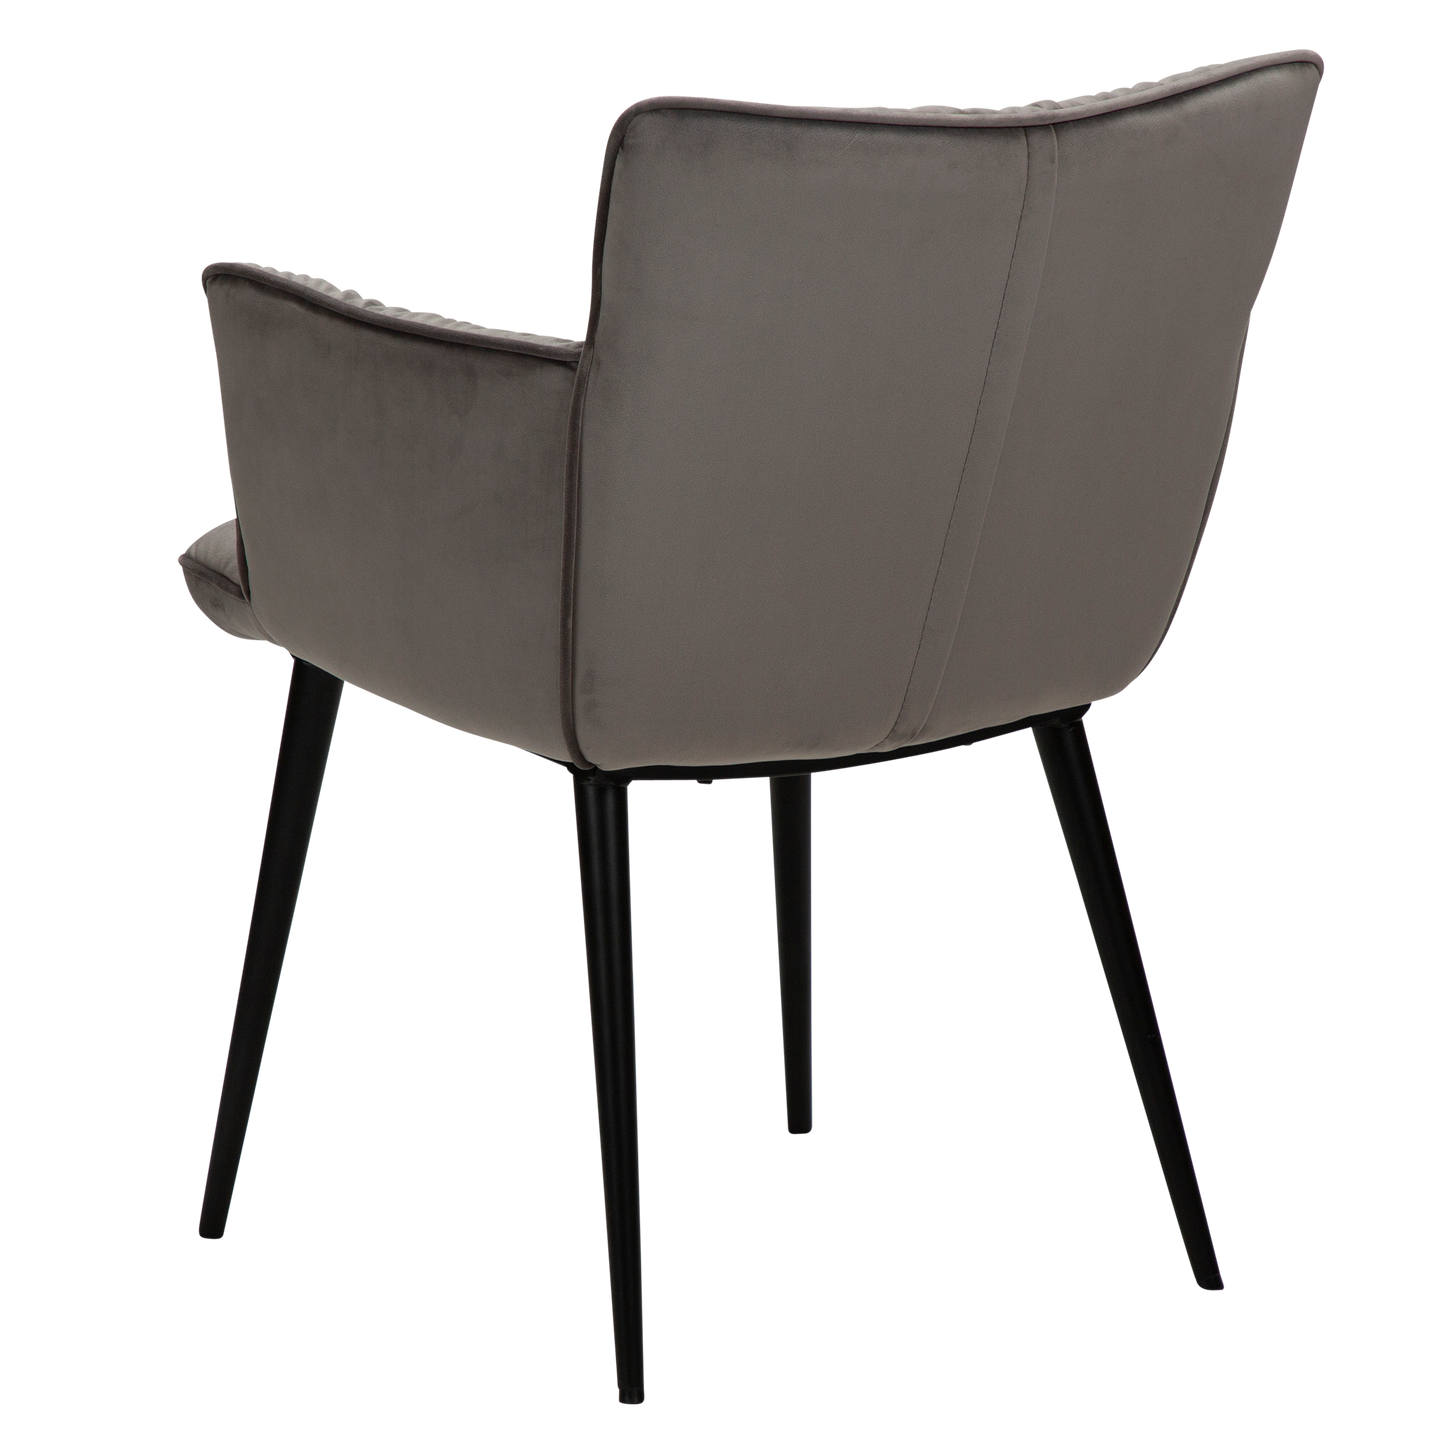 1 stk. JOIN Lænestol, grå fløjl stof, sorte metal ben.